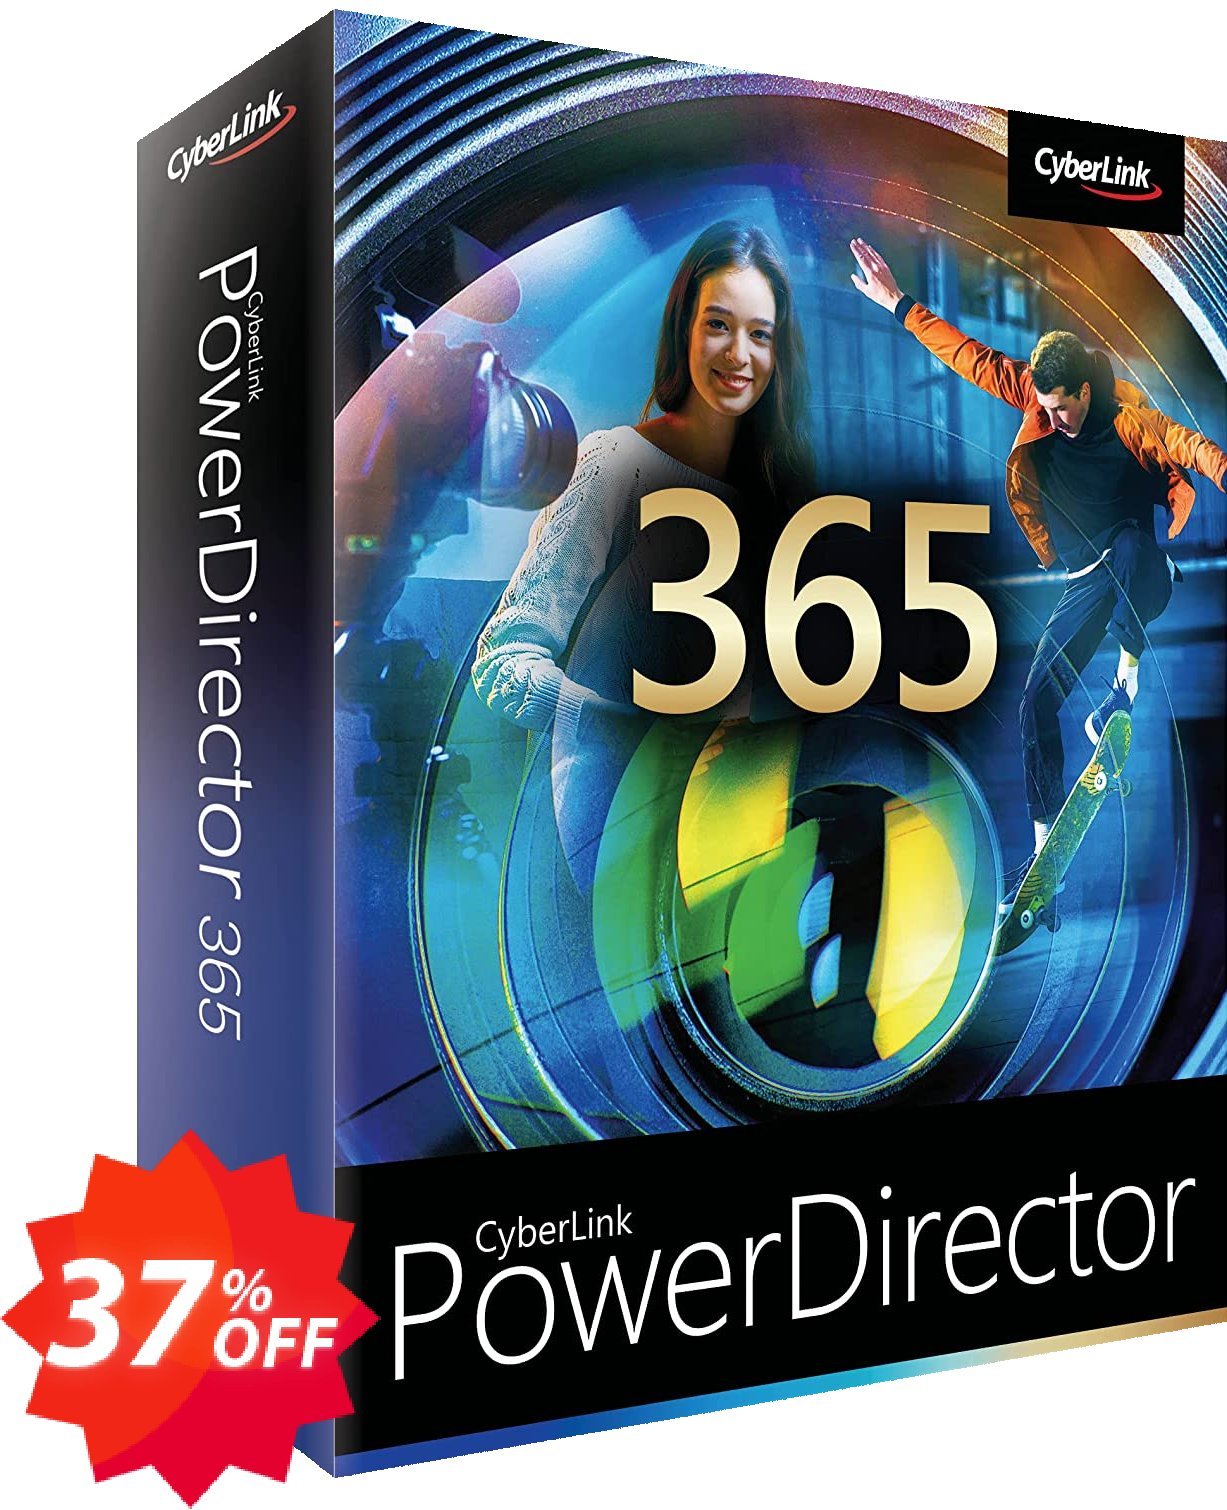 PowerDirector 365 - Annual Plan Coupon code 37% discount 